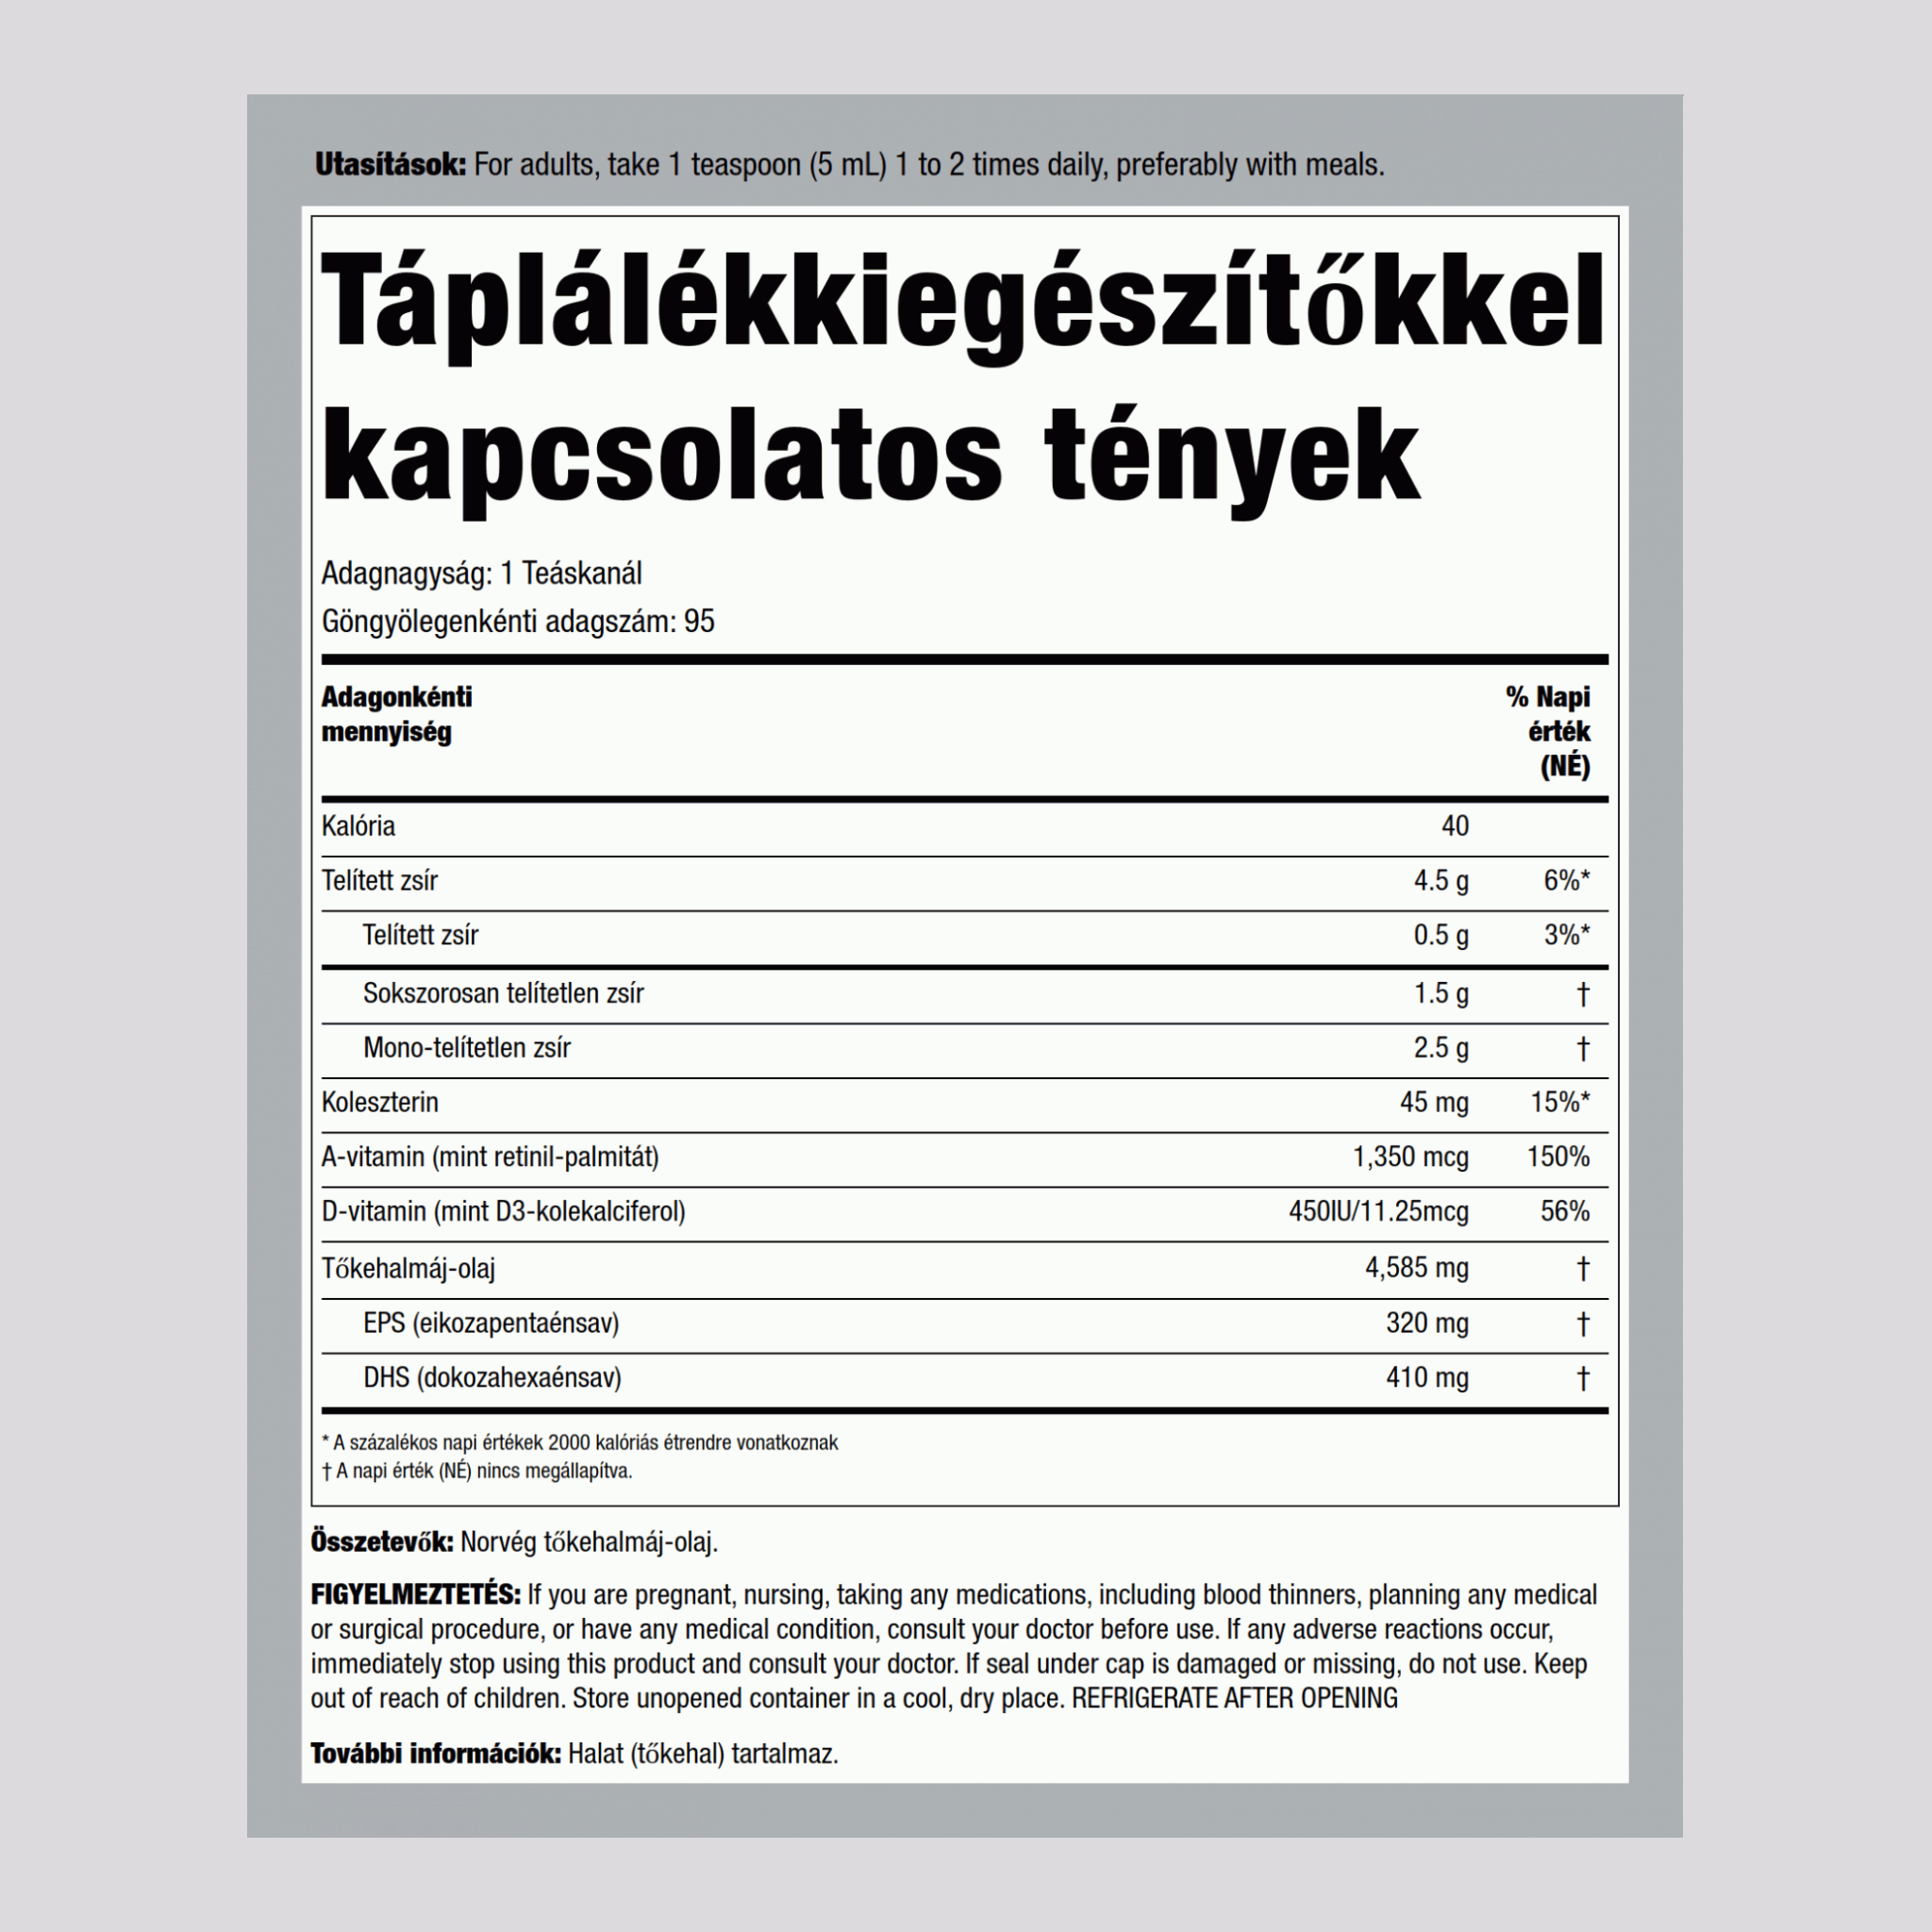 Engelvaer norvég tőkehalolaj (sima) 16 fl oz 473 ml Palack    